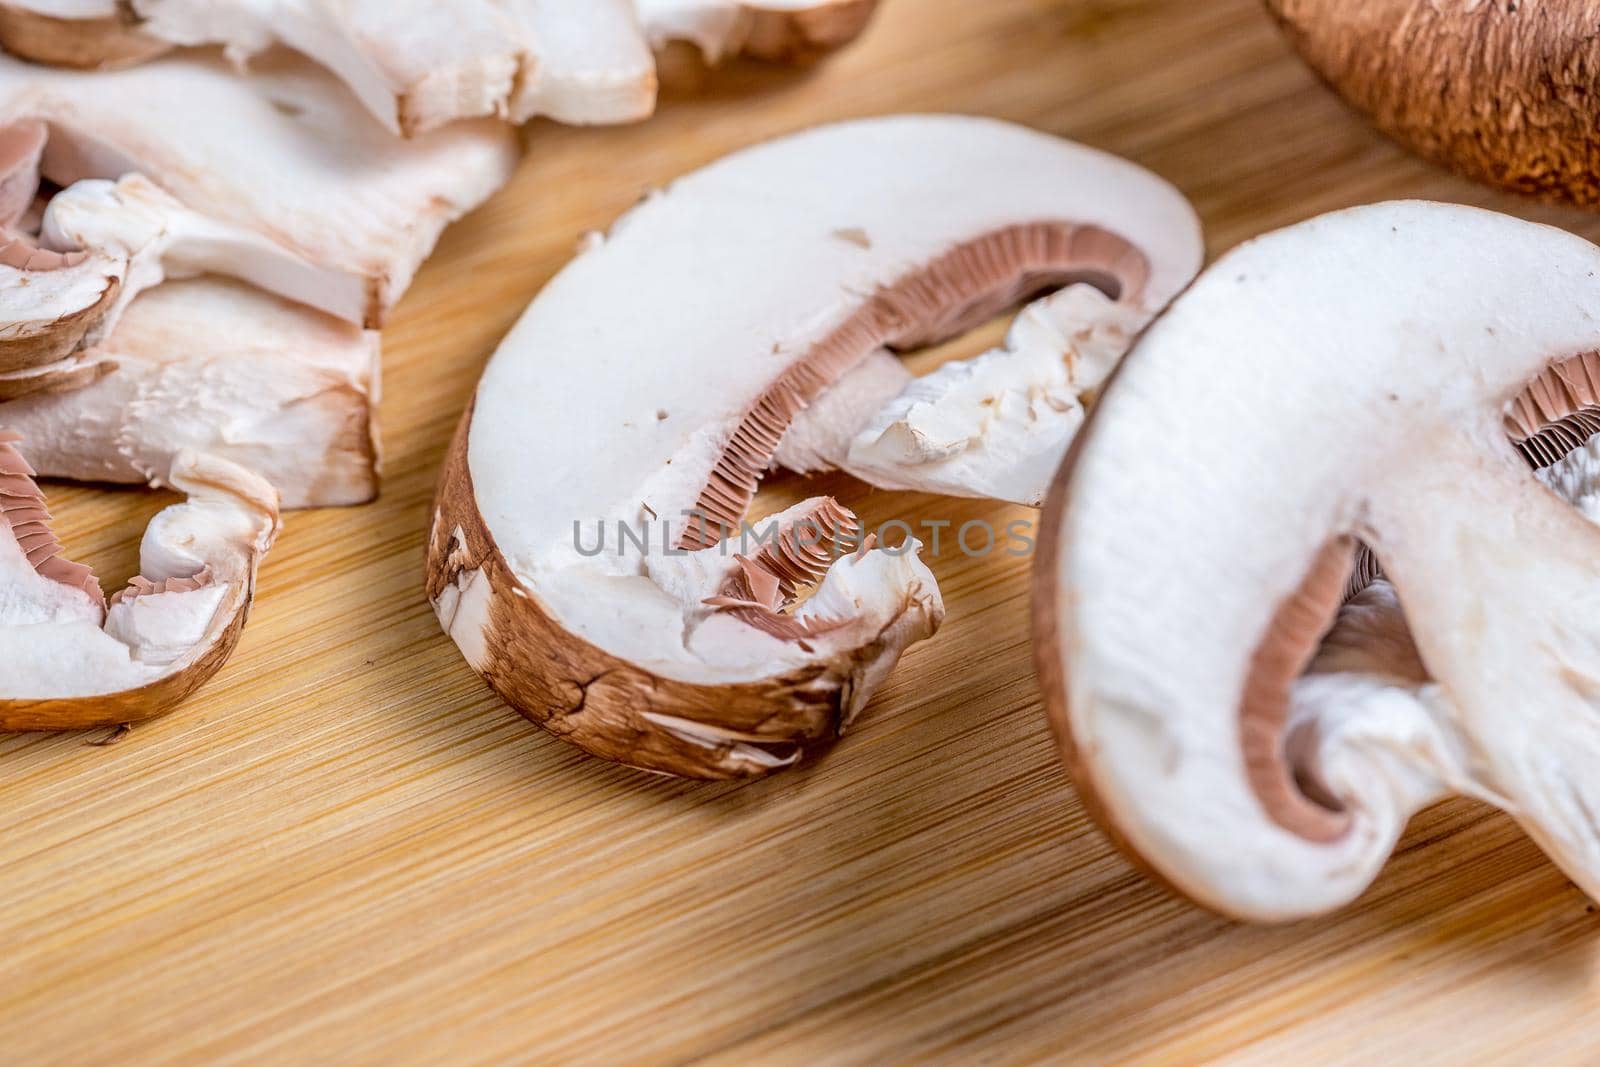 Royal champignons, chopped mushrooms on wooden board close-up by galinasharapova